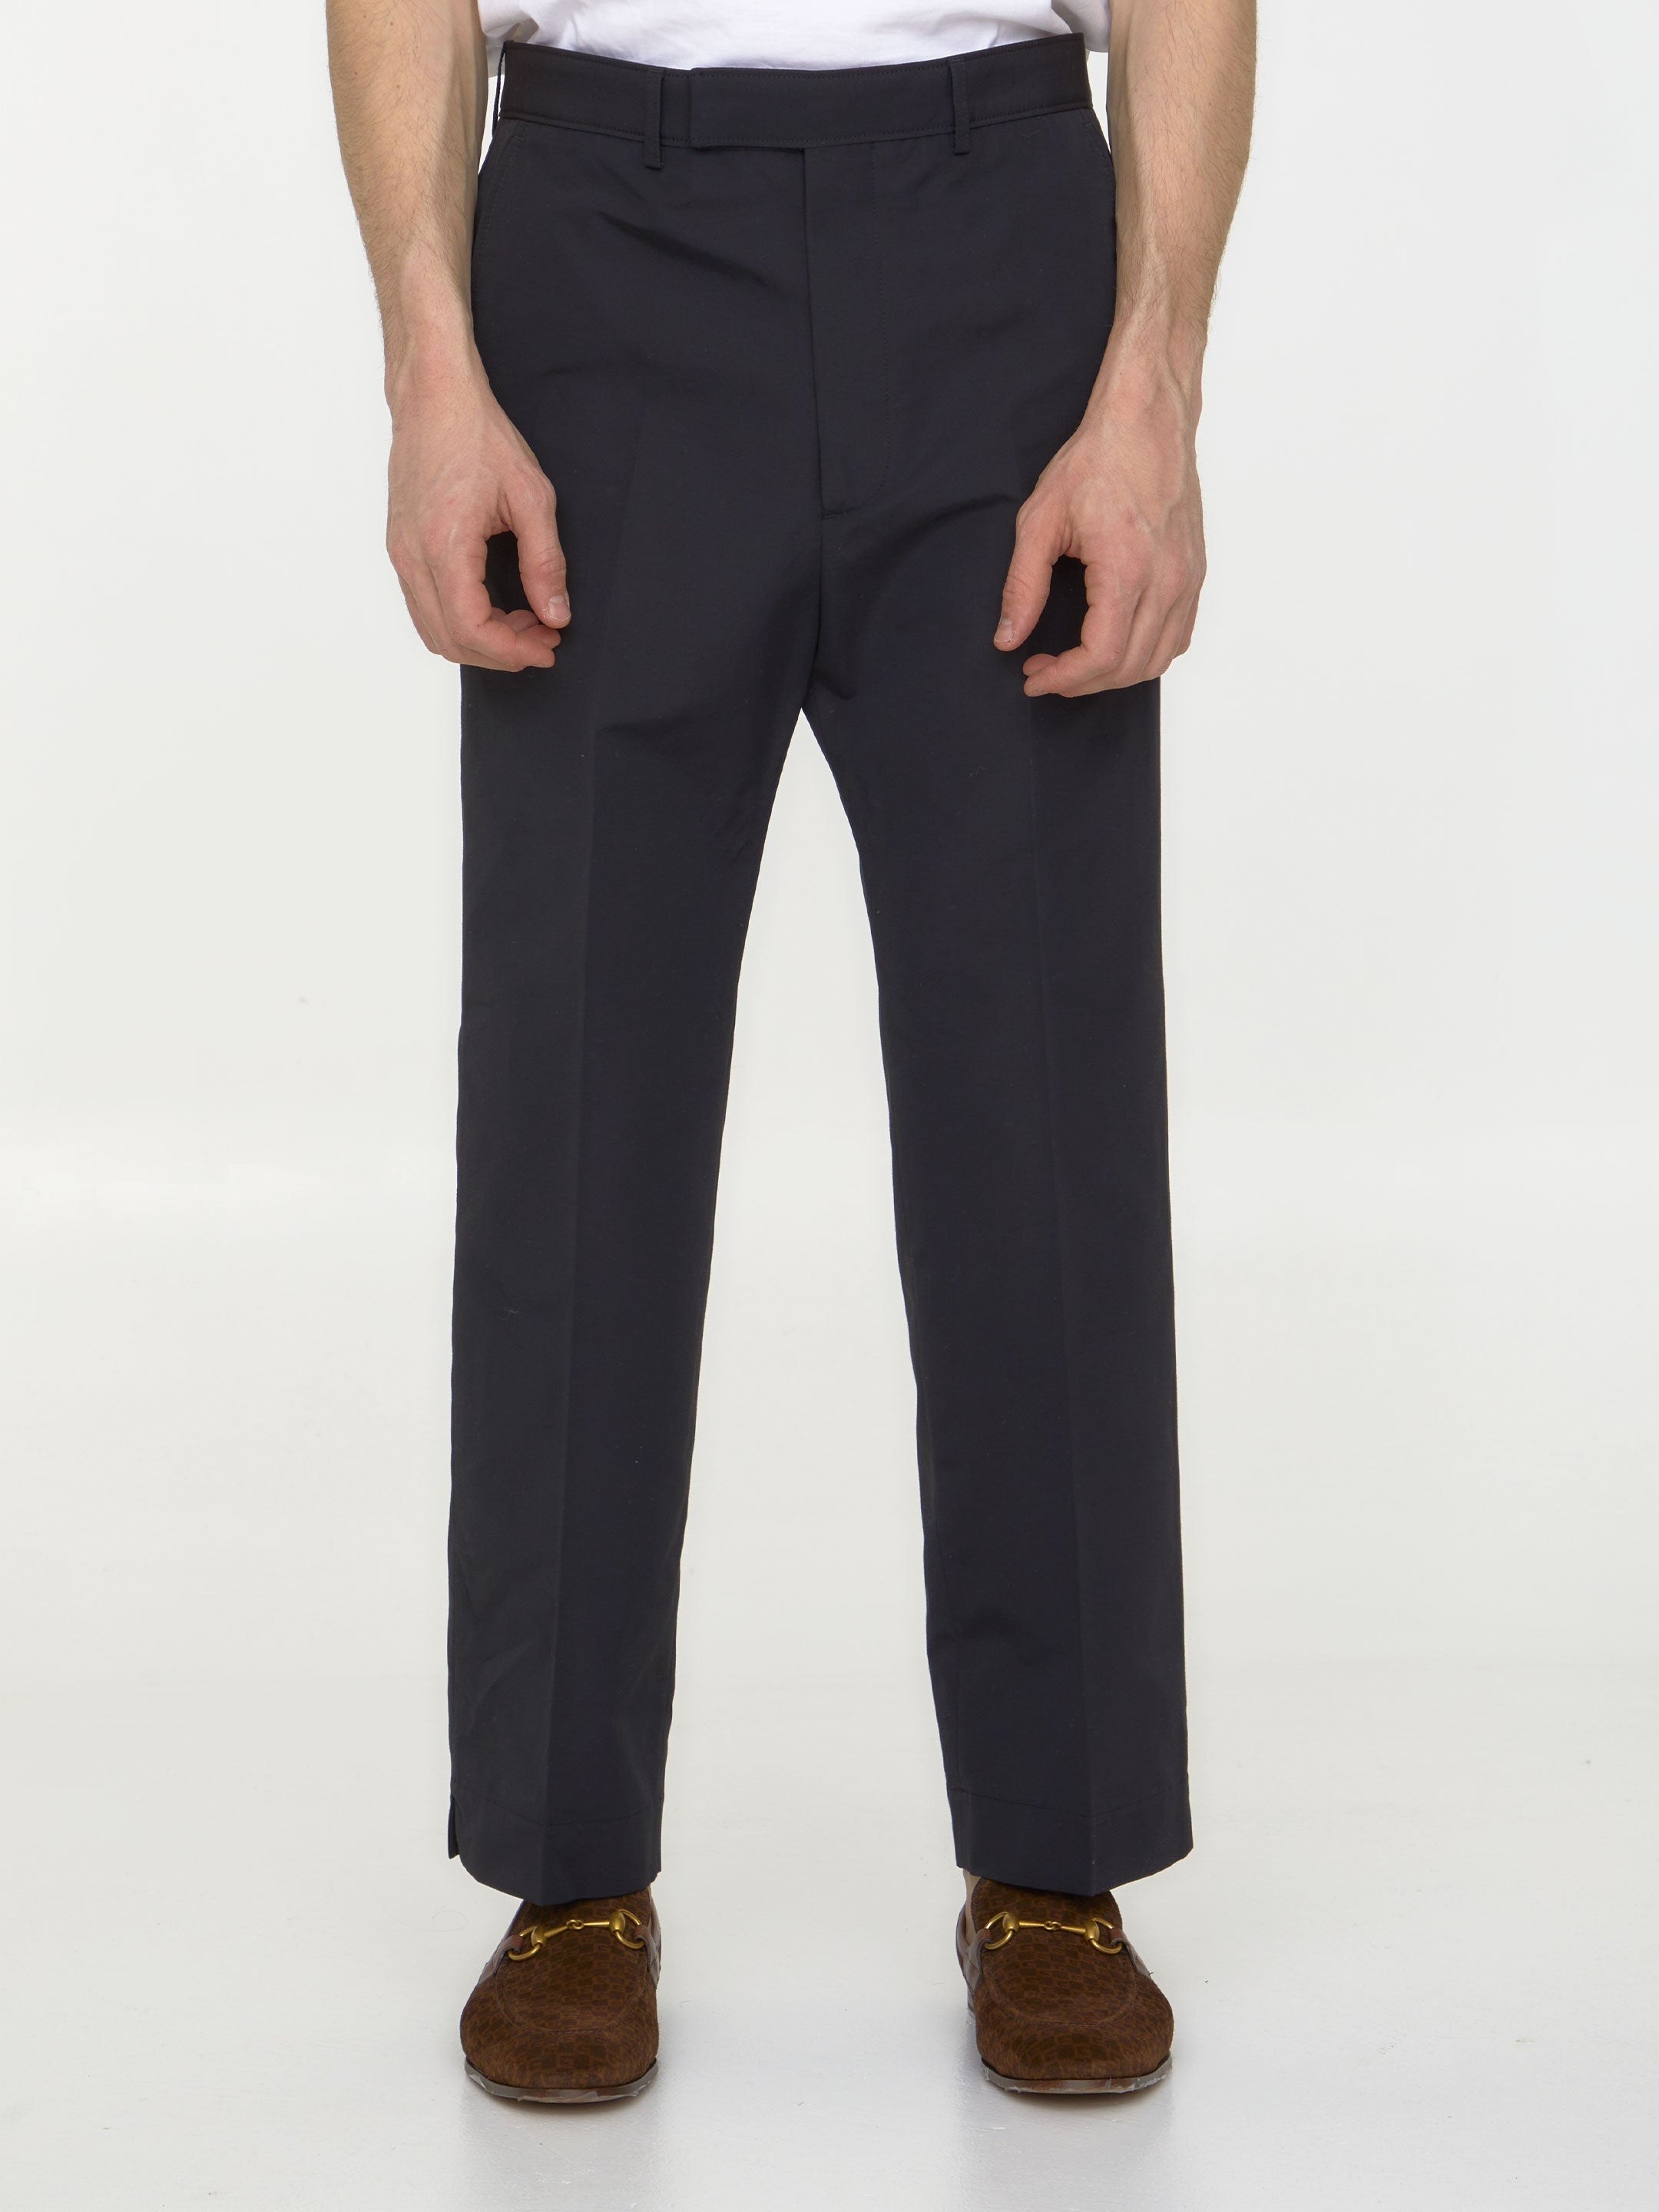 GUCCI-OUTLET-SALE-Cotton-poplin-trousers-Hosen-48-BLACK-ARCHIVE-COLLECTION.jpg